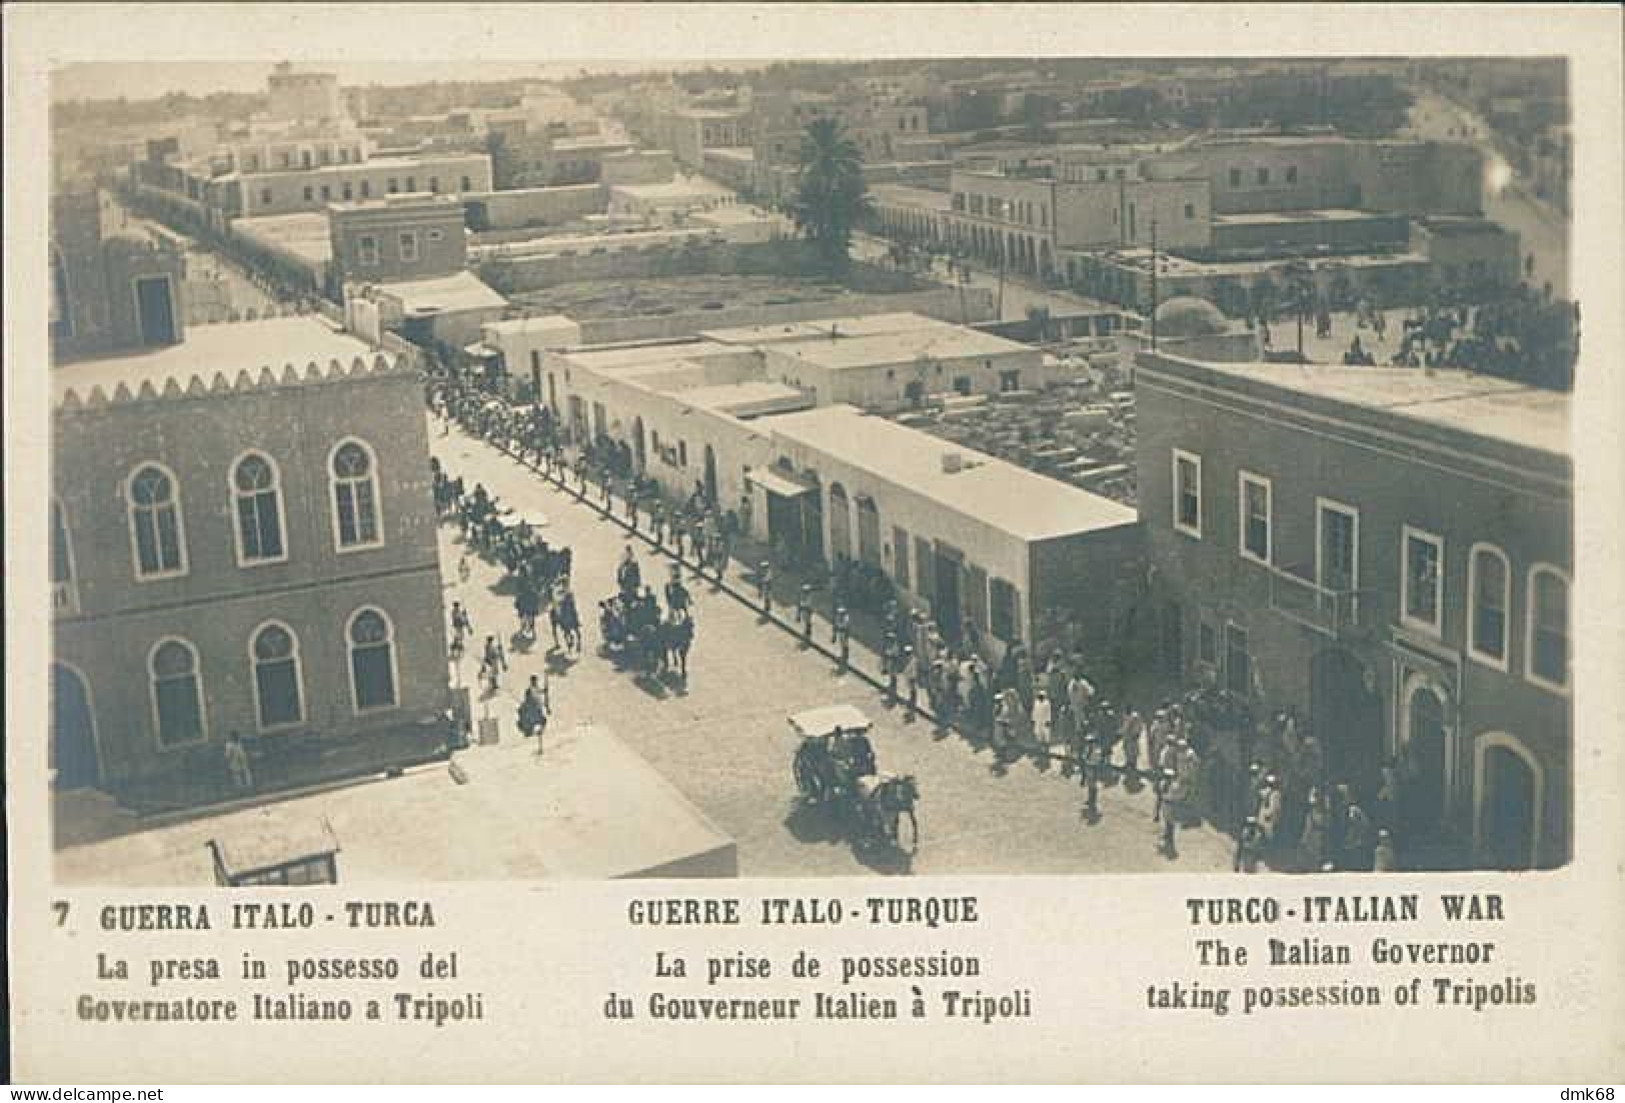 LIBYA / LIBIA - TURKEY / ITALY WAR - ITALIAN GOVERNOR TAKING POSSESSION OF TRIPOLI - RPPC POSTCARD 1910s (12595) - Libia